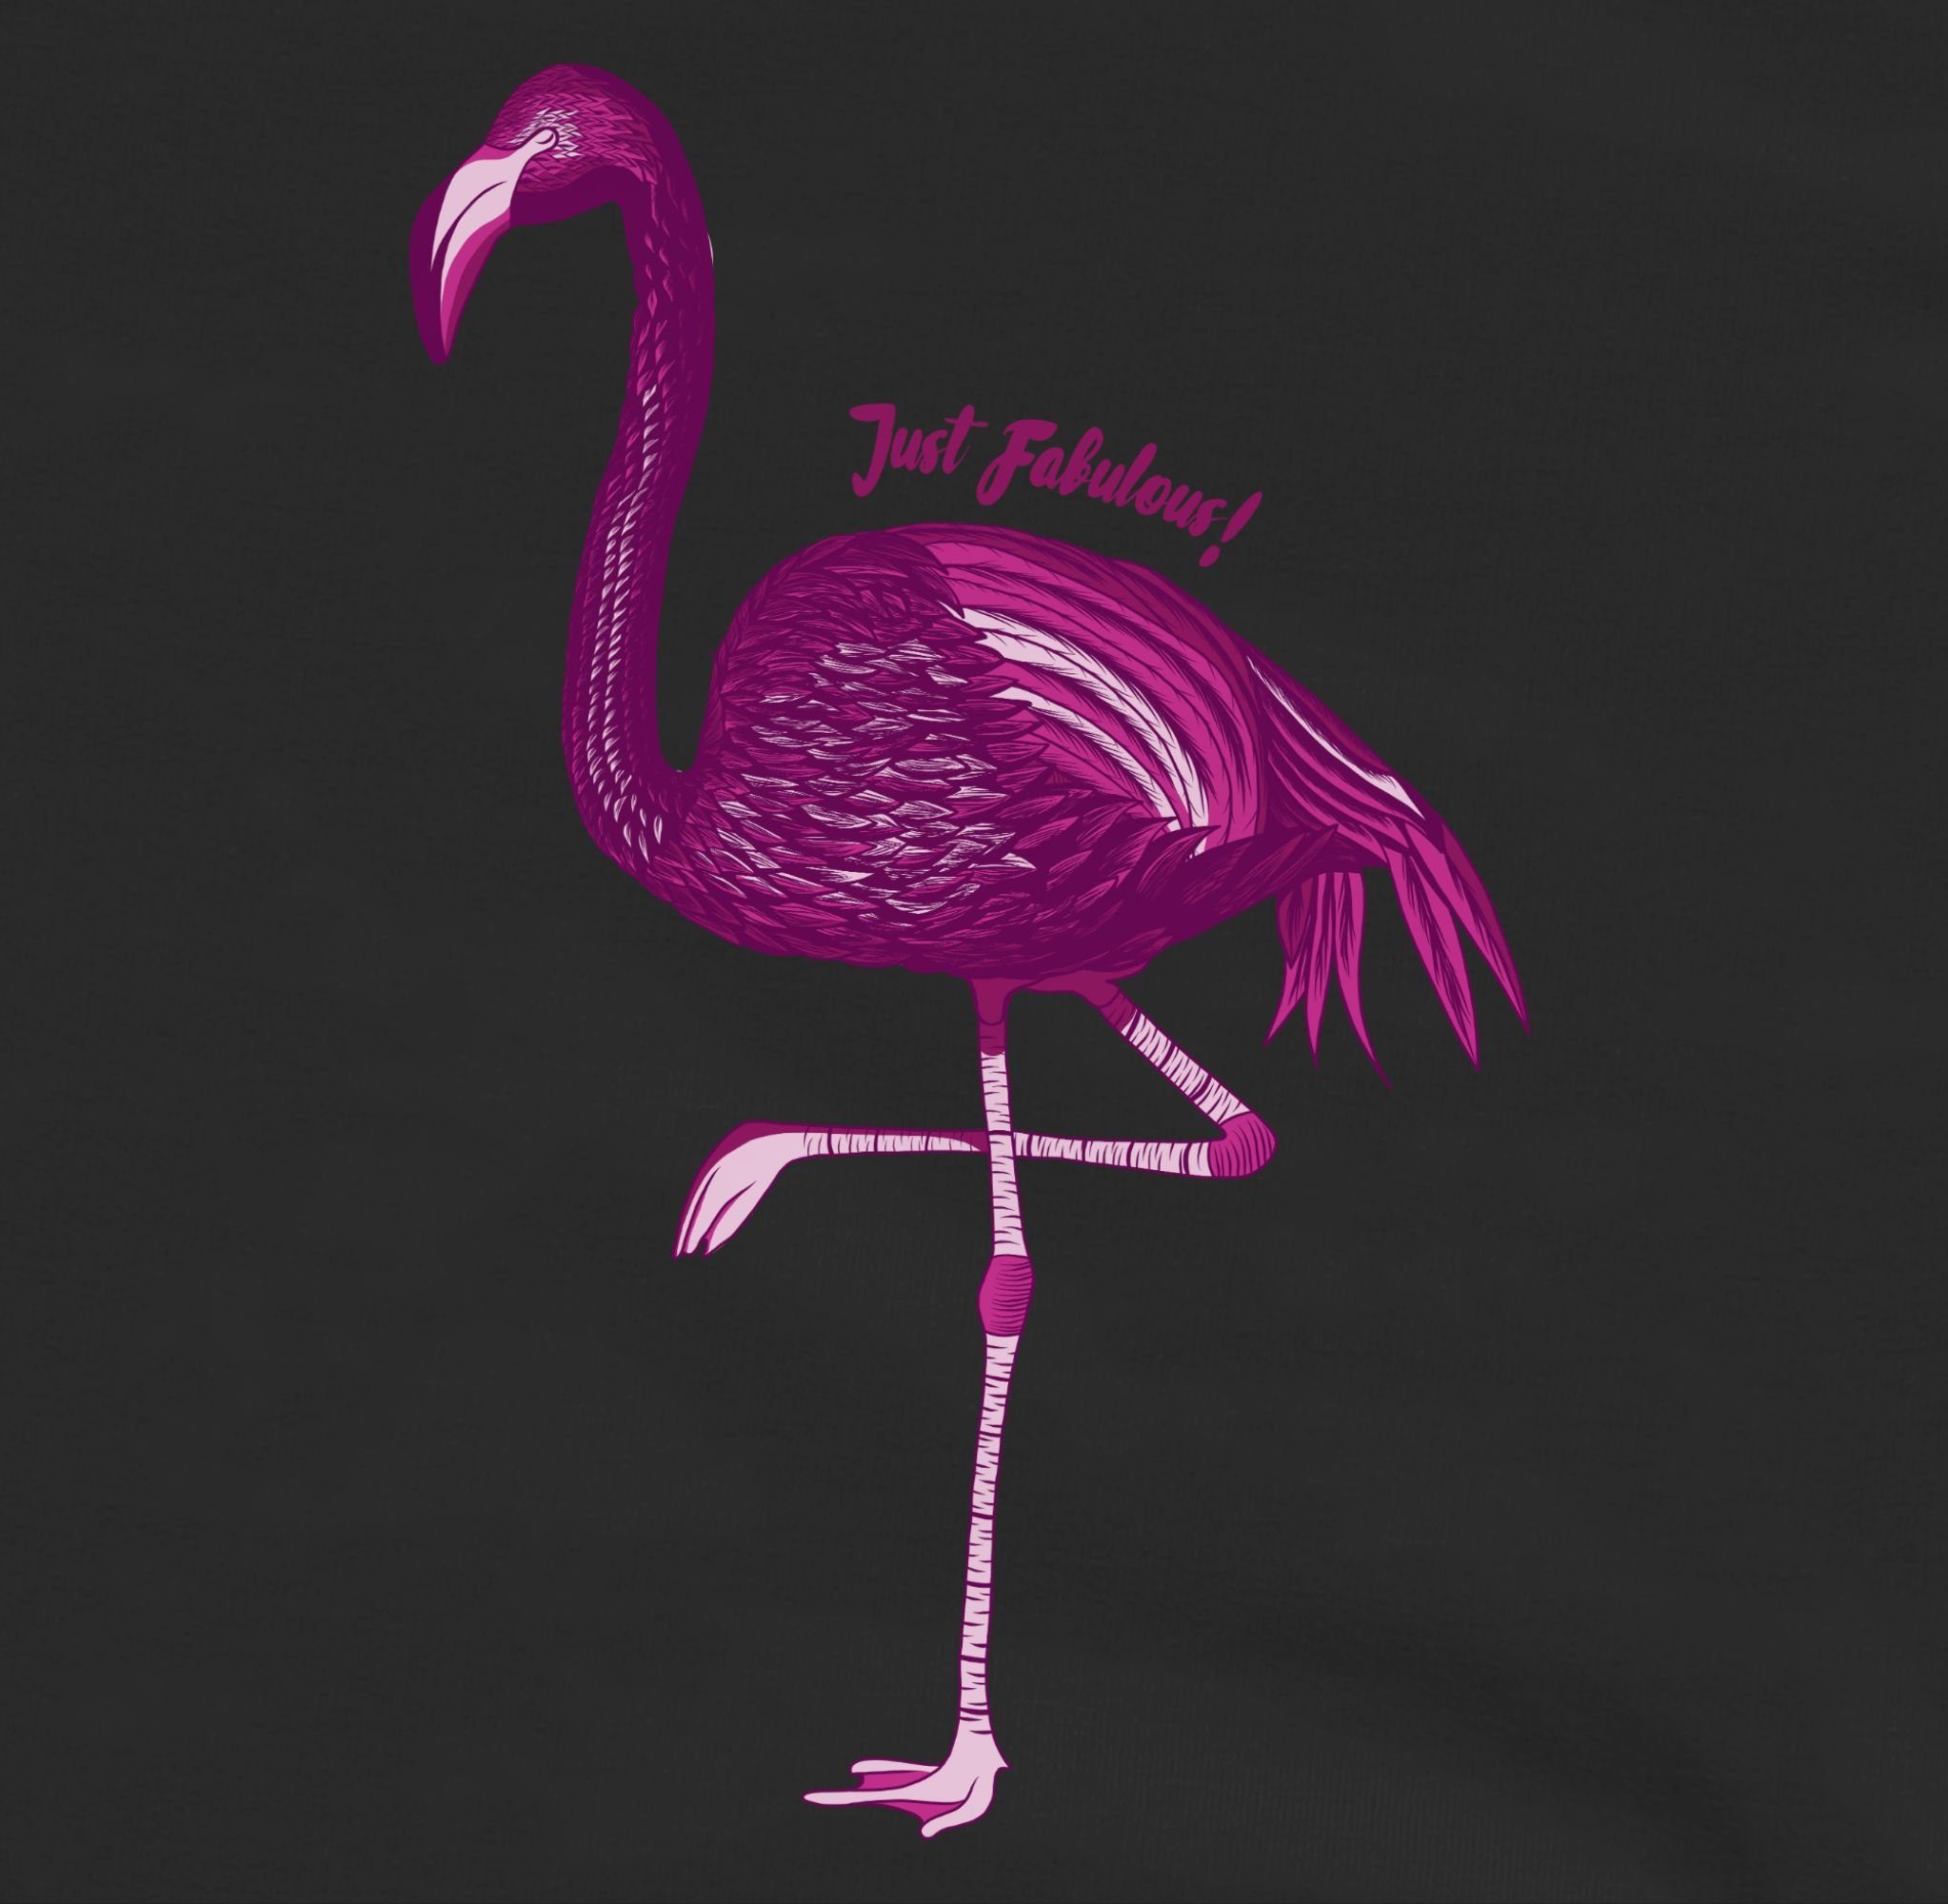 Shirtracer Sweatshirt Flamingo Tiermotiv Just Schwarz - Animal 3 Fabulous Print